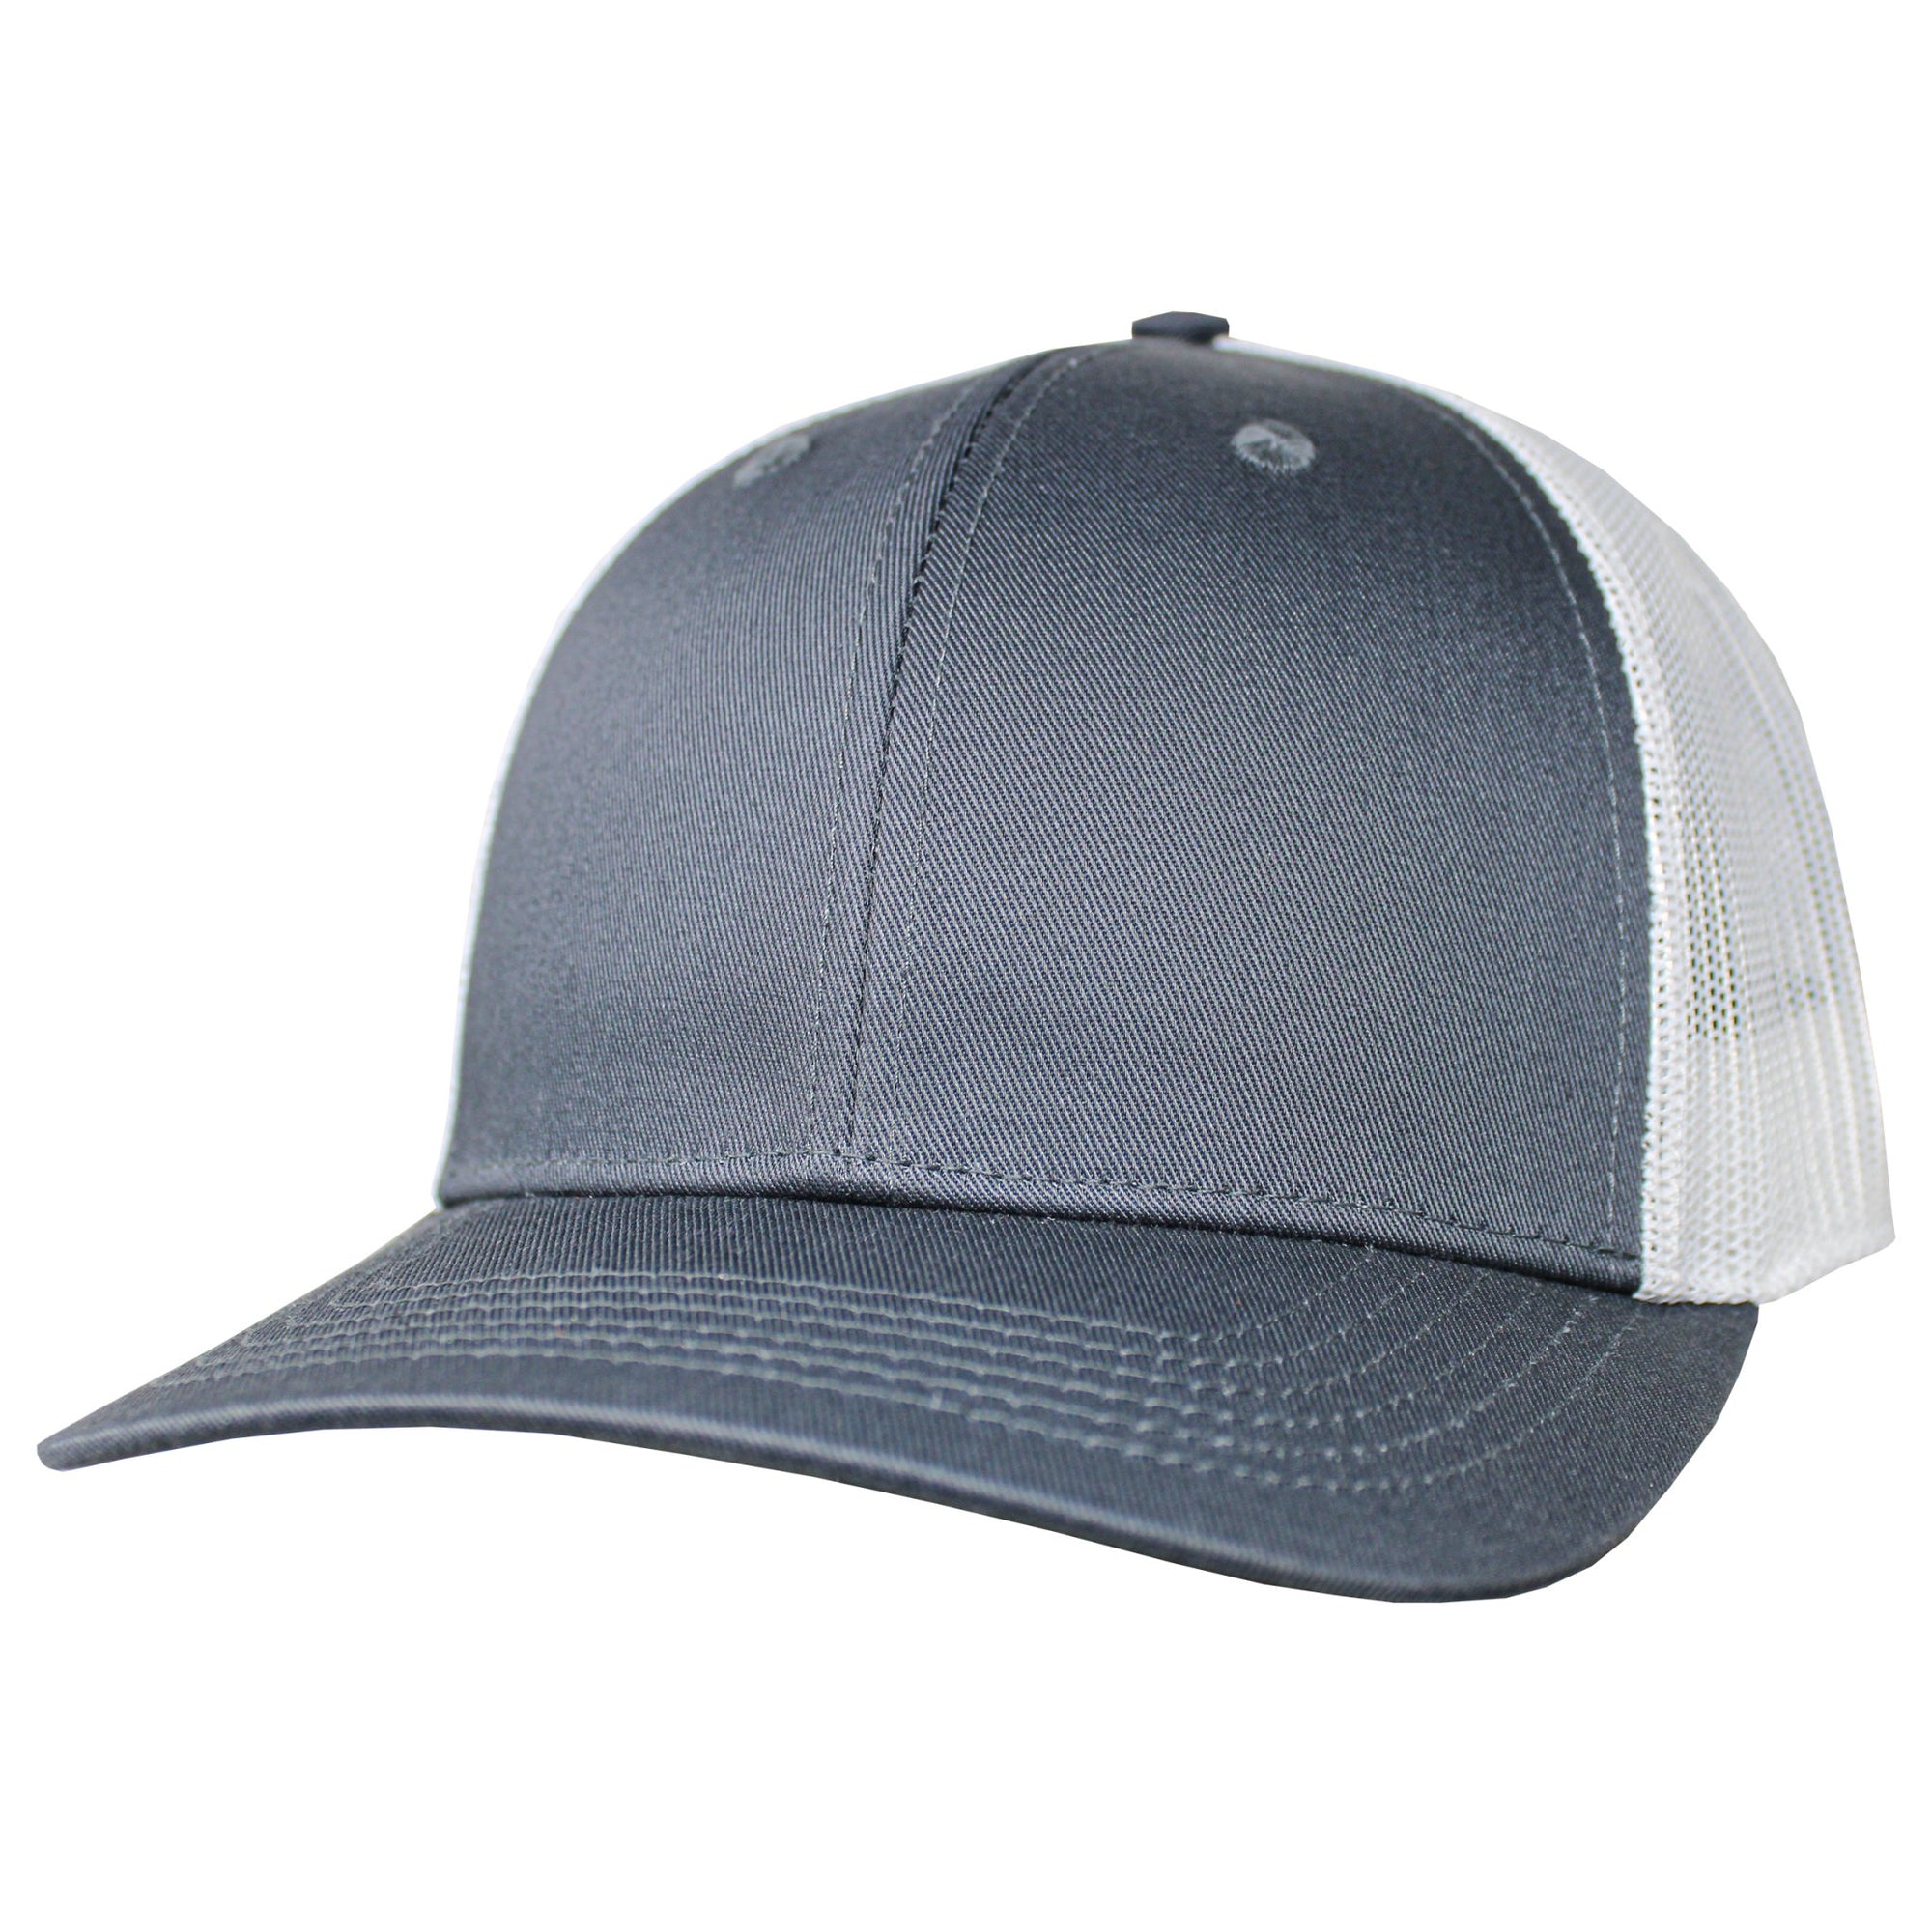 Blank Headwear - BC23 / 6 Panel Performance Trucker Cap - Dark Gray / White - Black Cat MFG - Hat